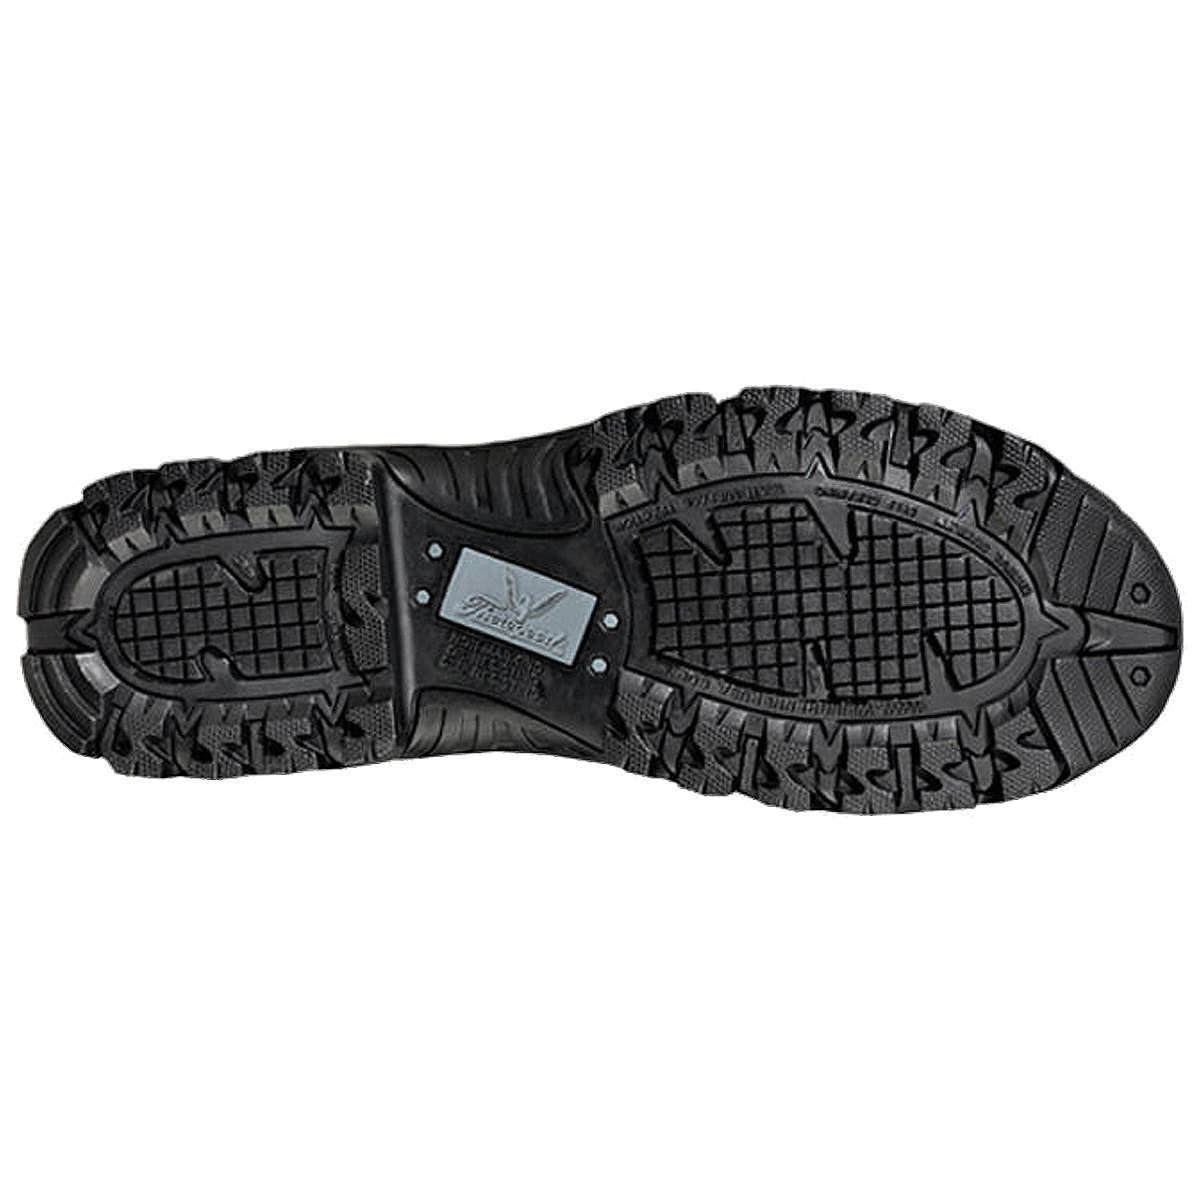 Thorogood Deuce 8 Inch Waterproof Side Zip Leather Men's Tactical Boots#color_black